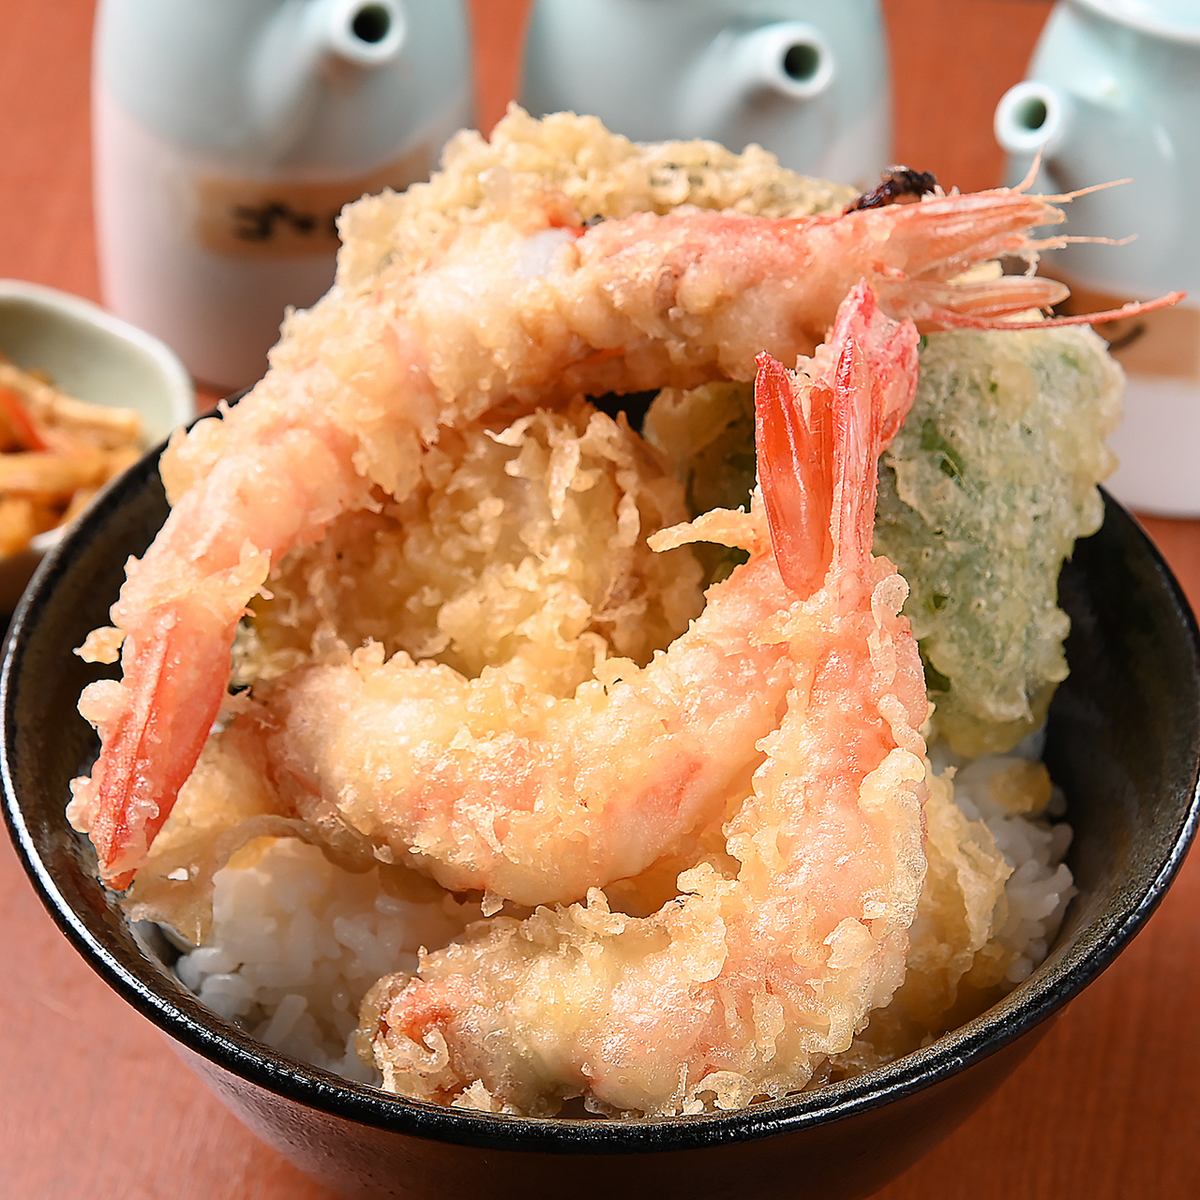 Choose from 12 types of tempura to create your own original tempura bowl.